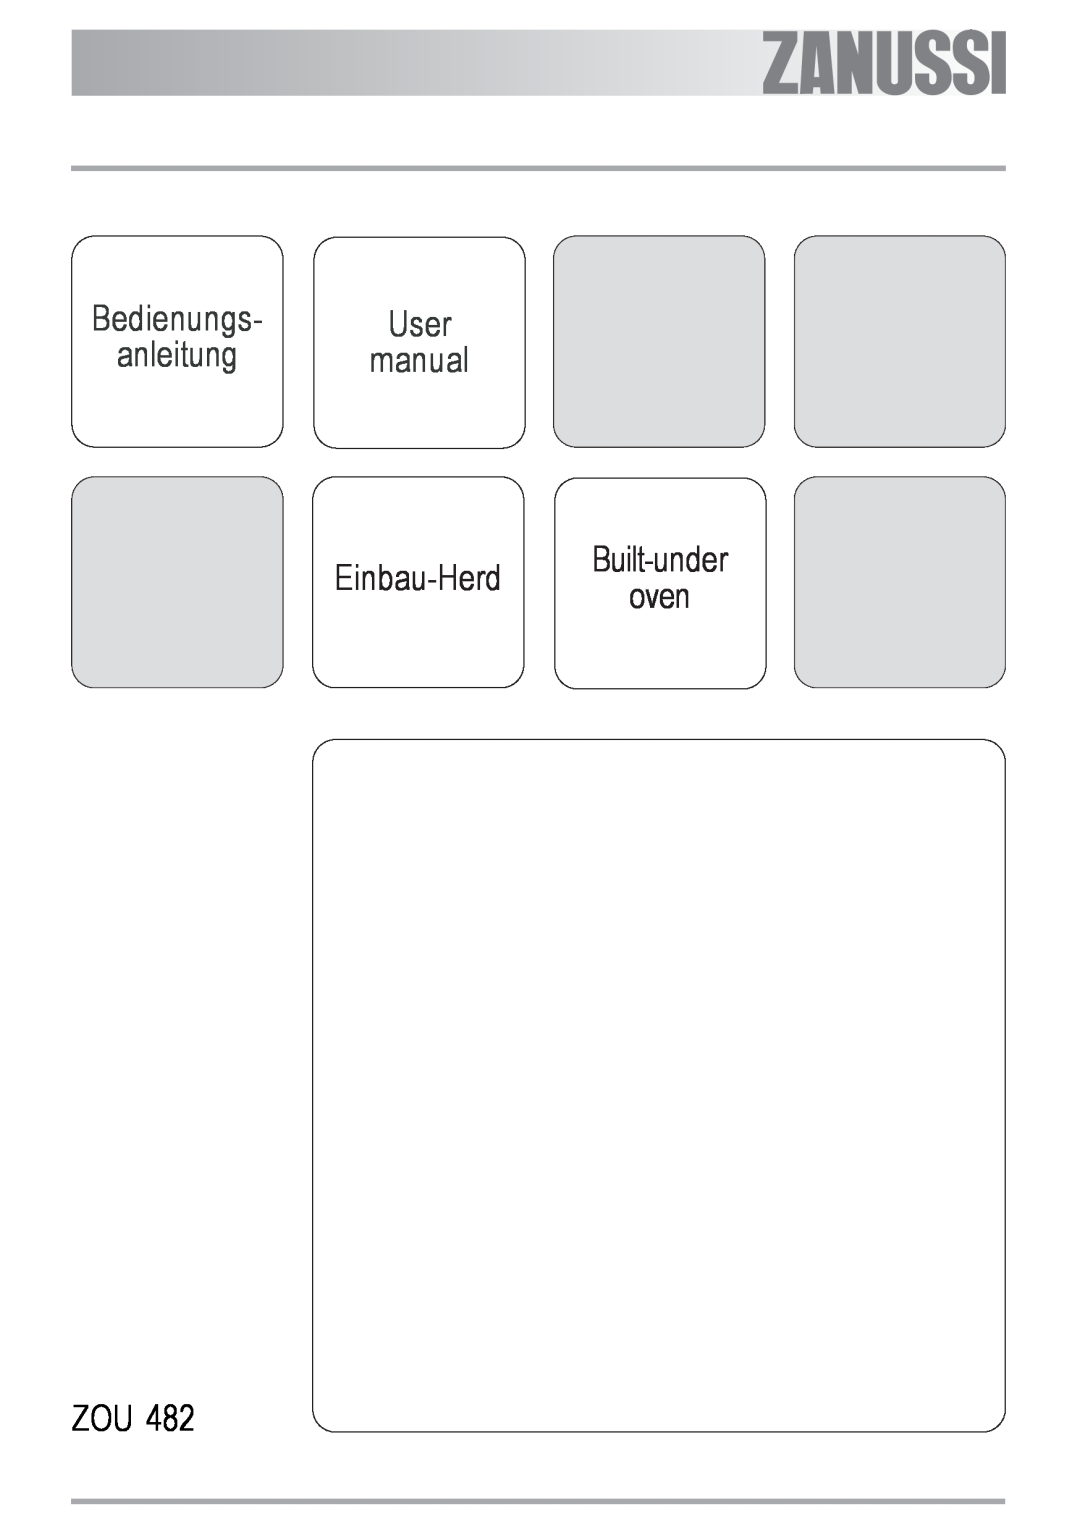 Zanussi ZOU 482 user manual Einbau-Herd Built-under oven, Bedienungs- User anleitung manual 